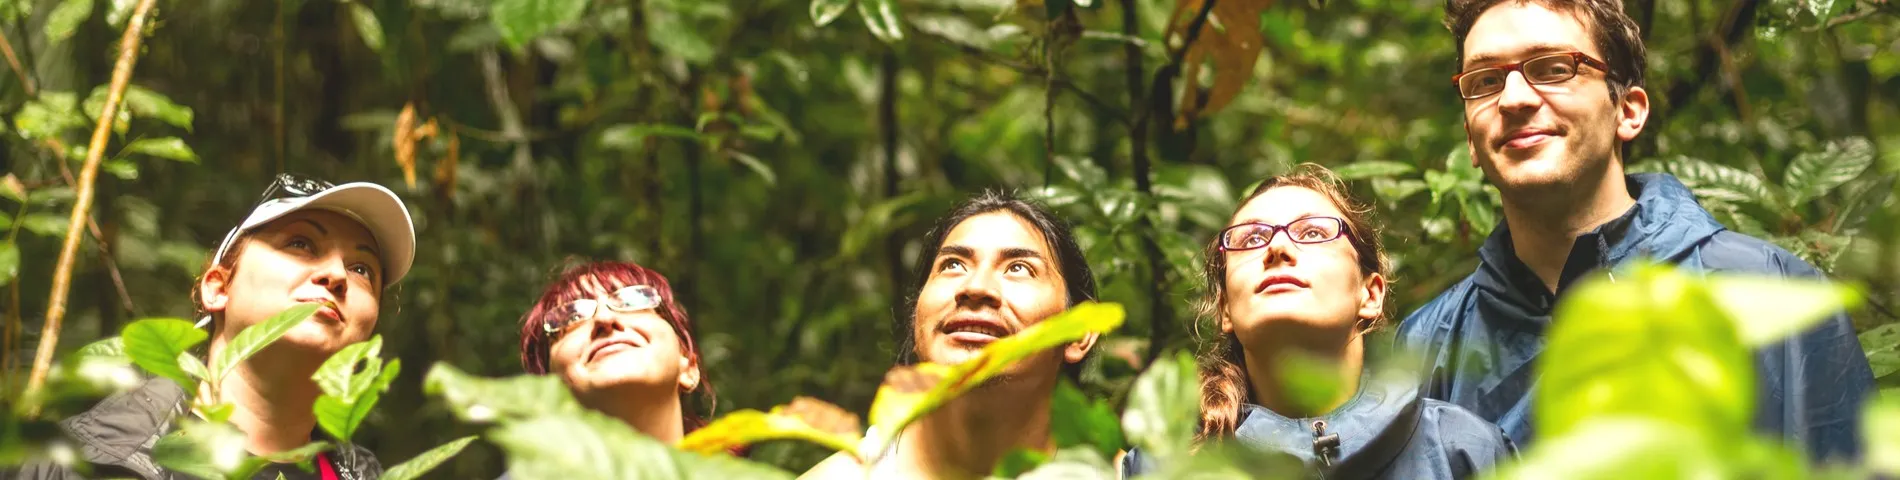 Jungle amazonienne - 